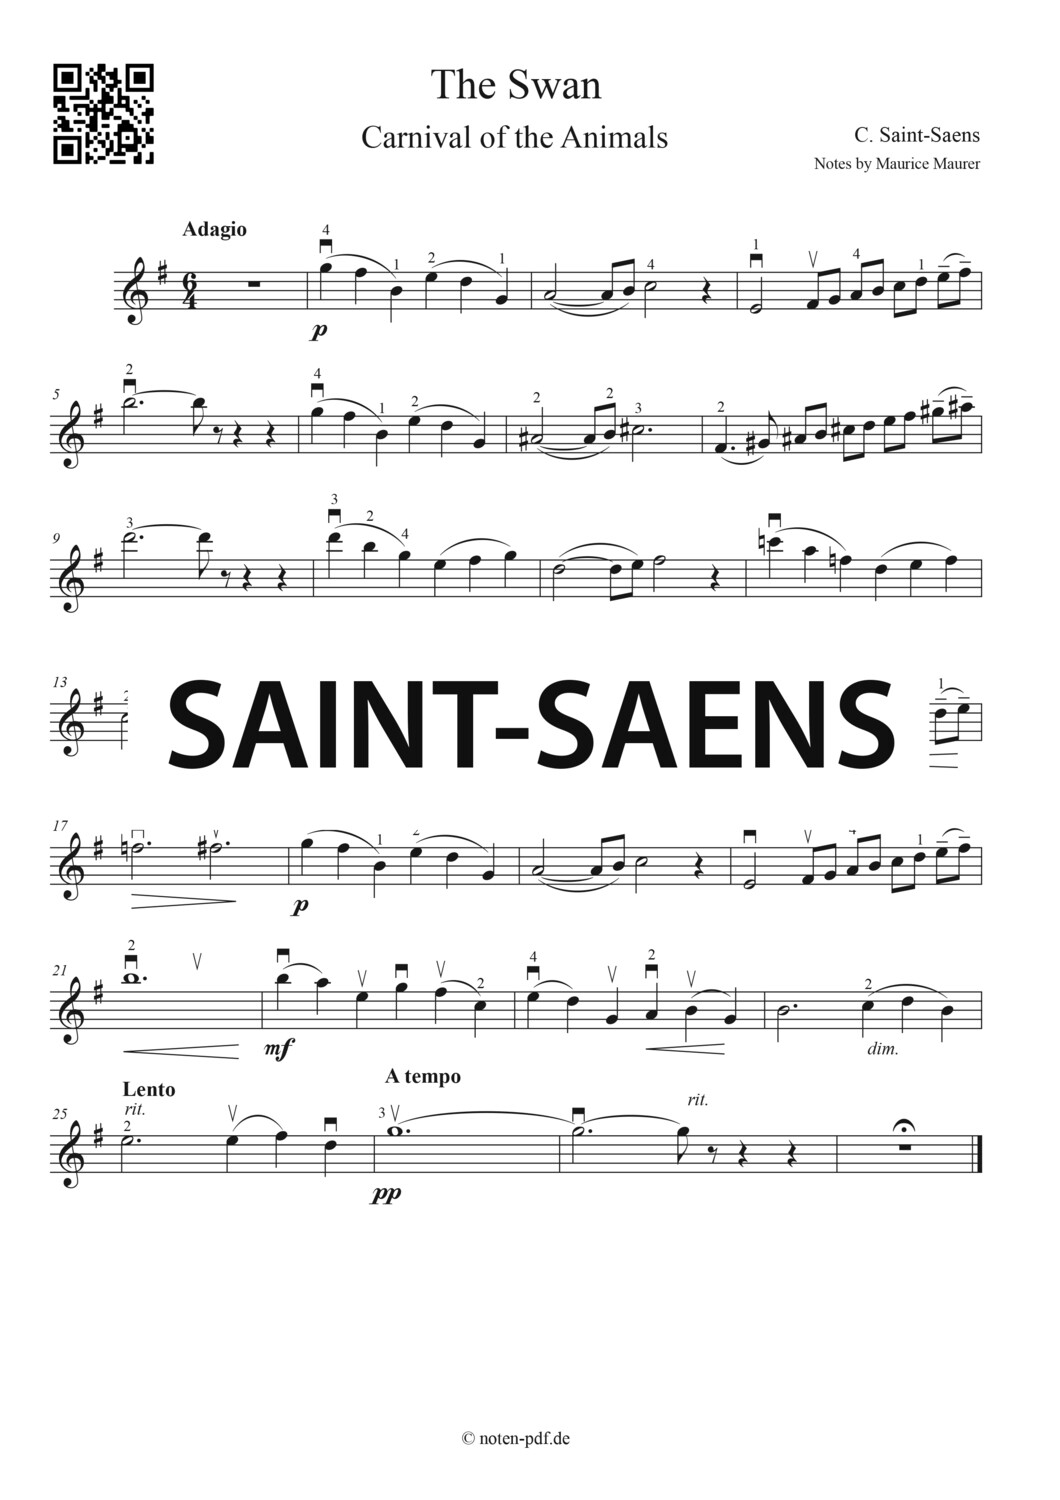 Saint-Säens: The Swan + MP3